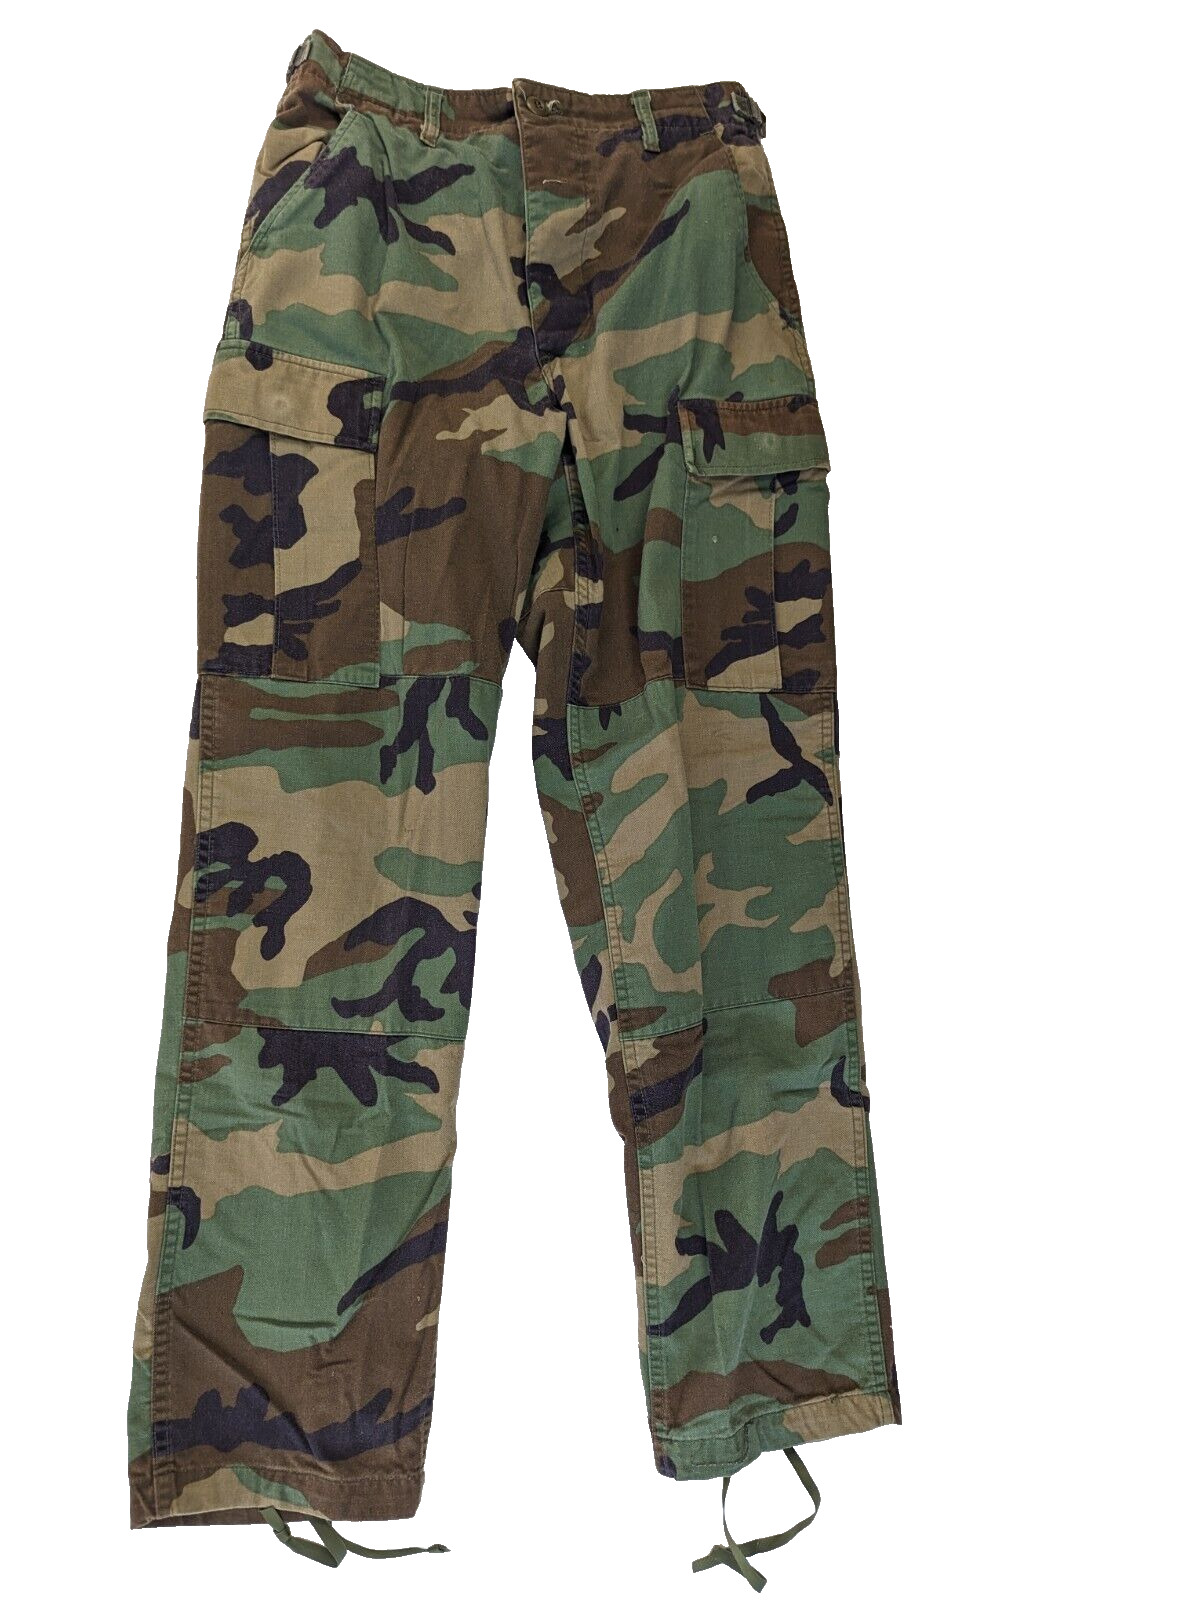 Propper Army Woodland Camo Cargo Pants Combat 8415-01-084-1709 Small Regular